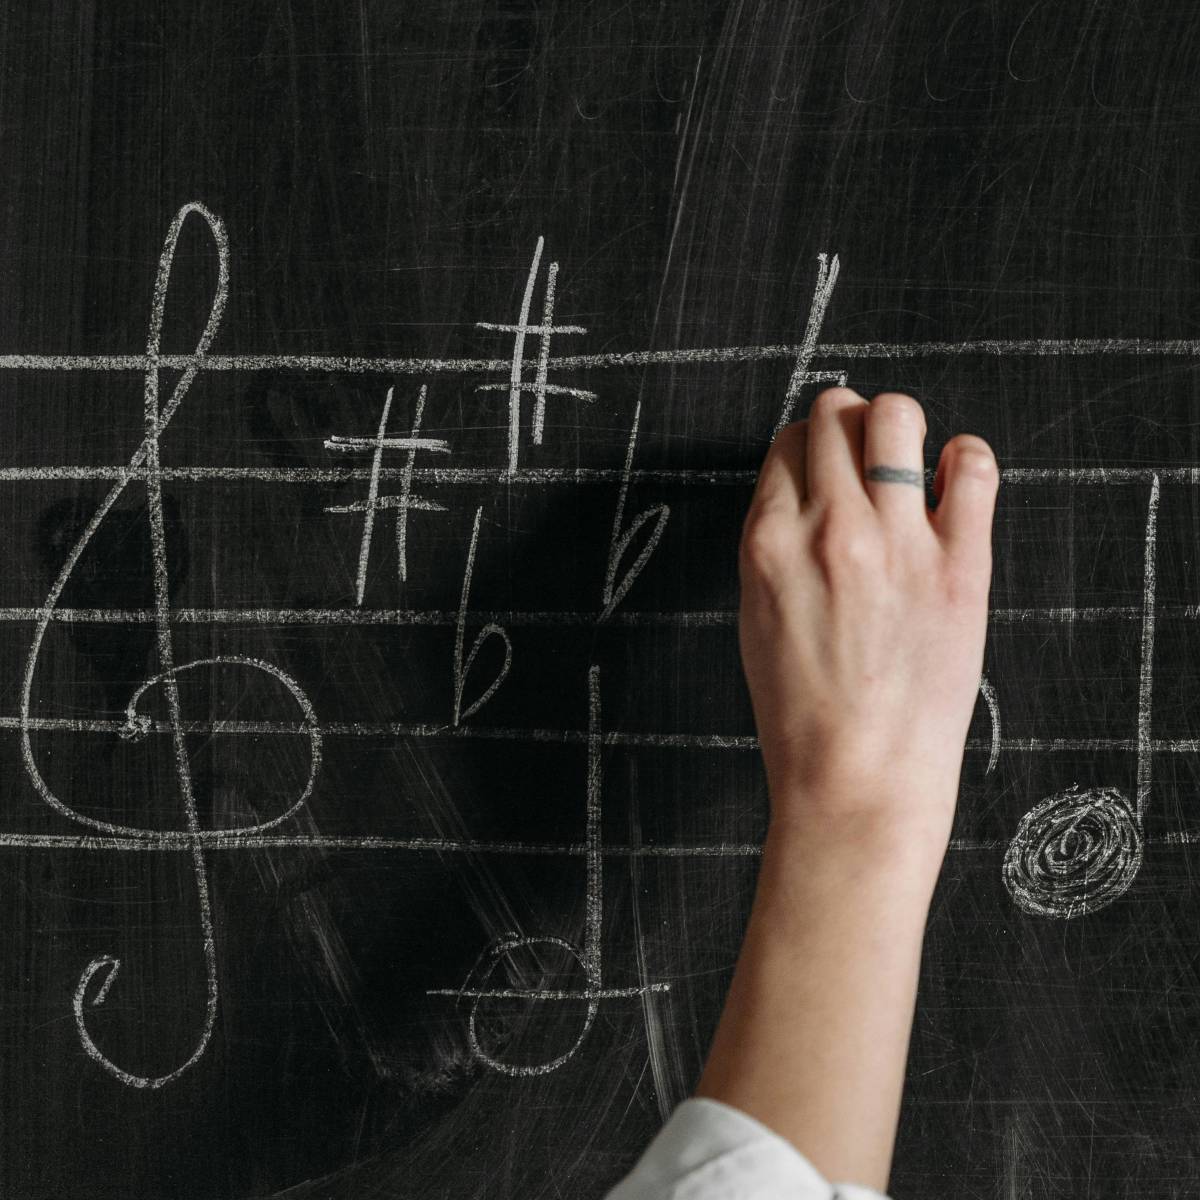 Hand writing music on a chalkboard